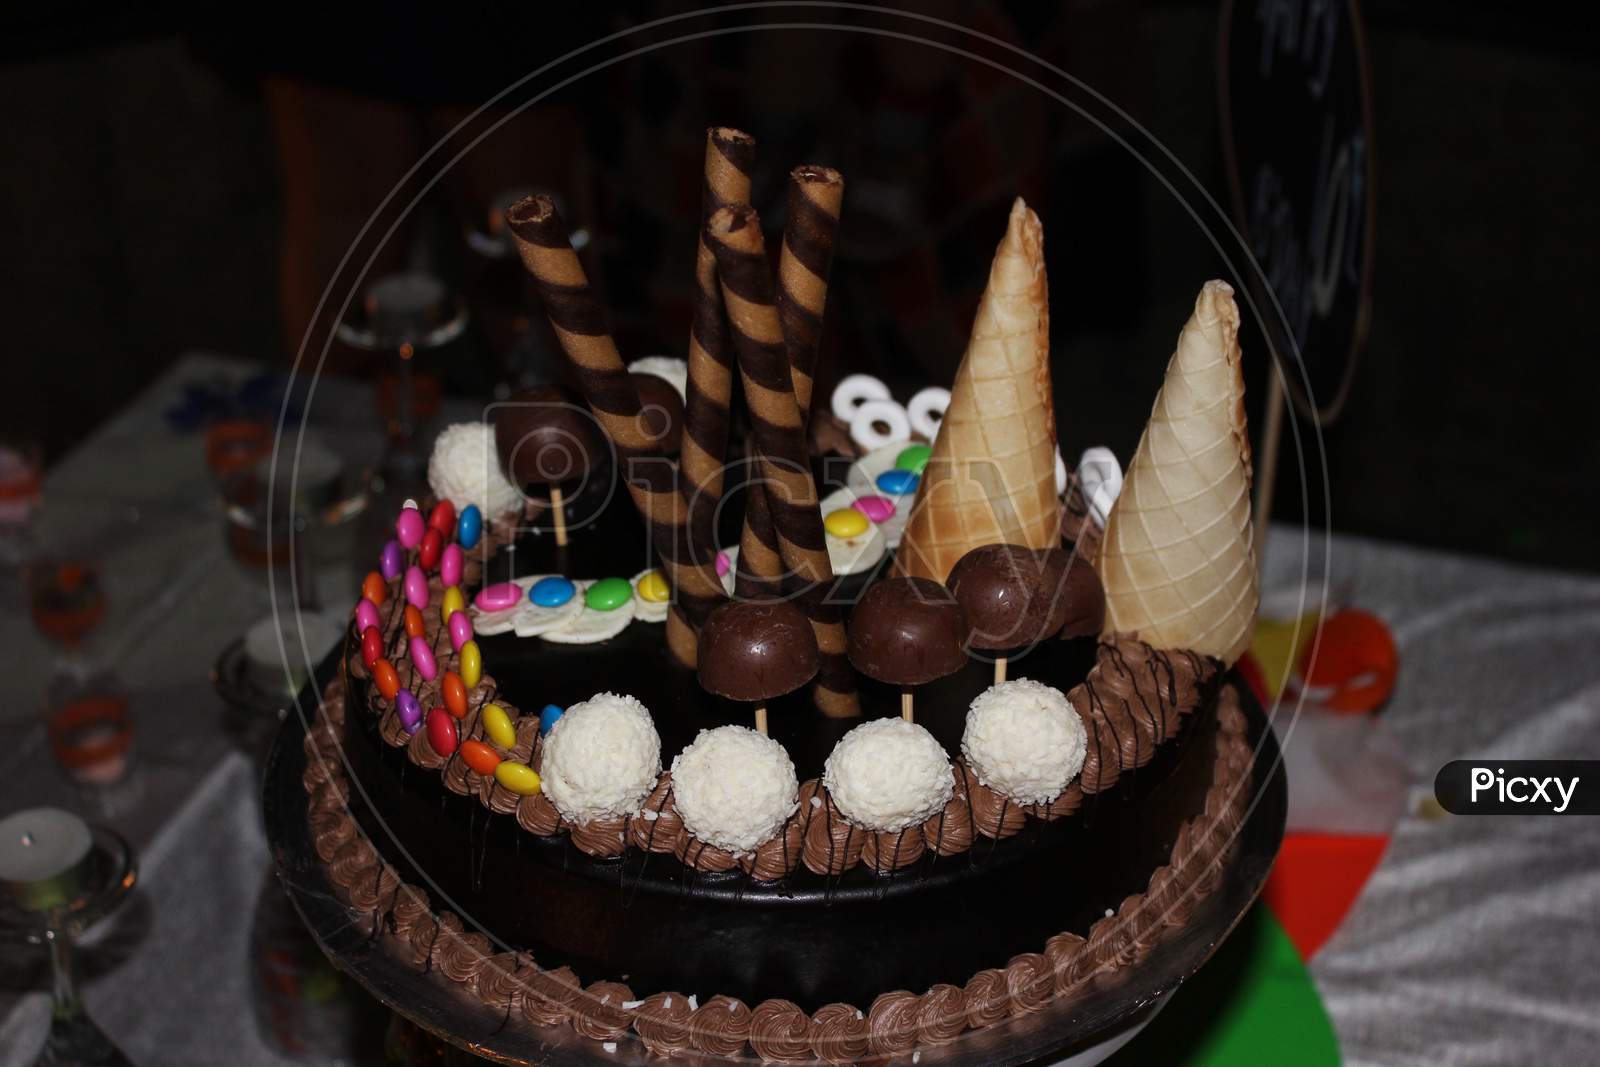 A Beautiful Birthday Cake Made By Chocolate Garnish With Chocolate